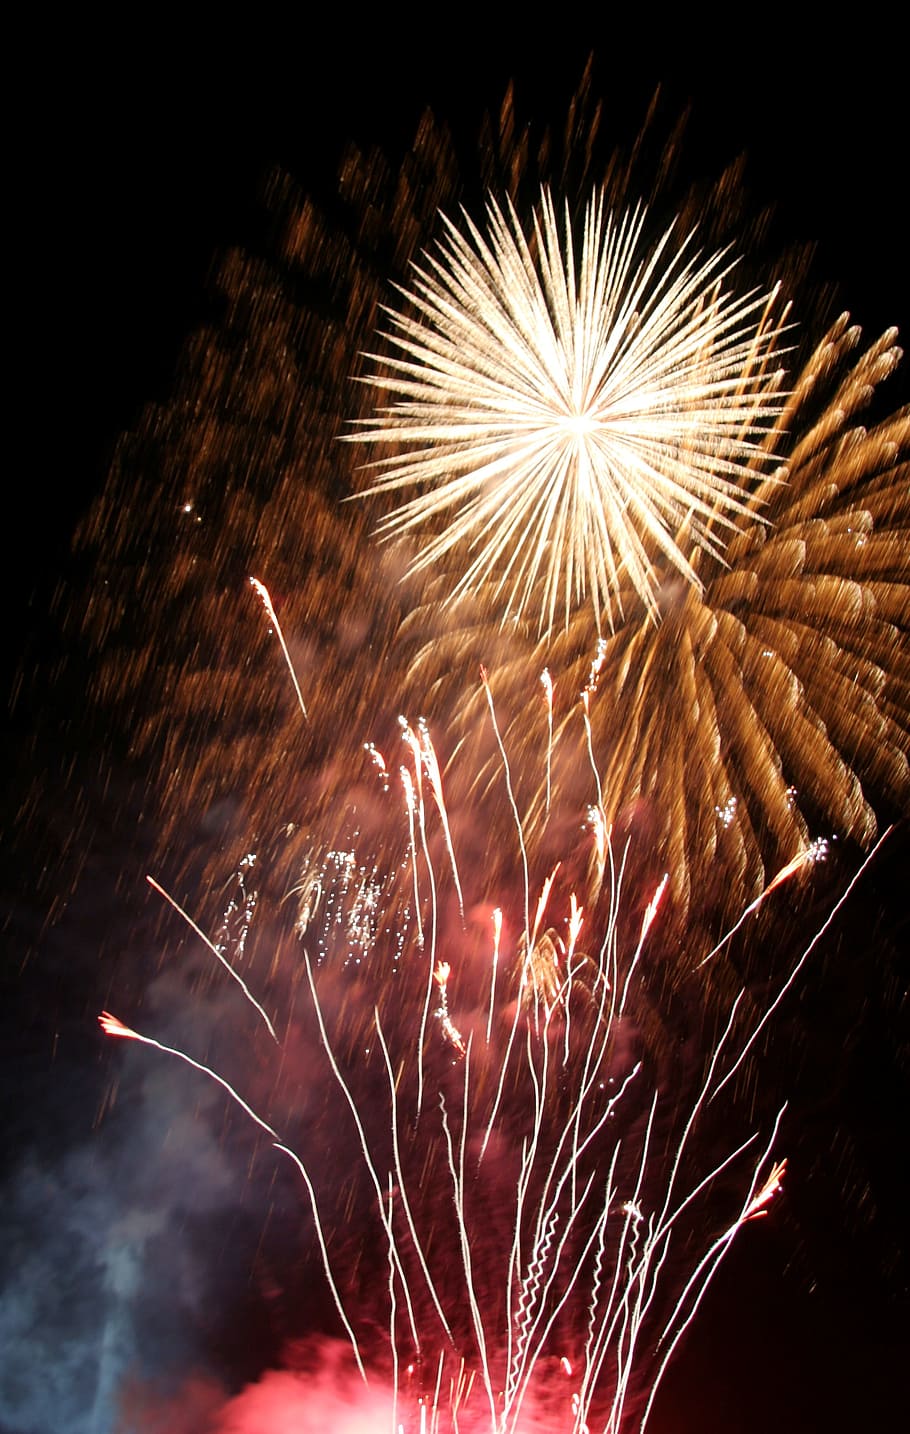 fireworks display, Fireworks, Rocket, Light, Night, light, night, sylvester, explosion, pyrotechnics, cracker